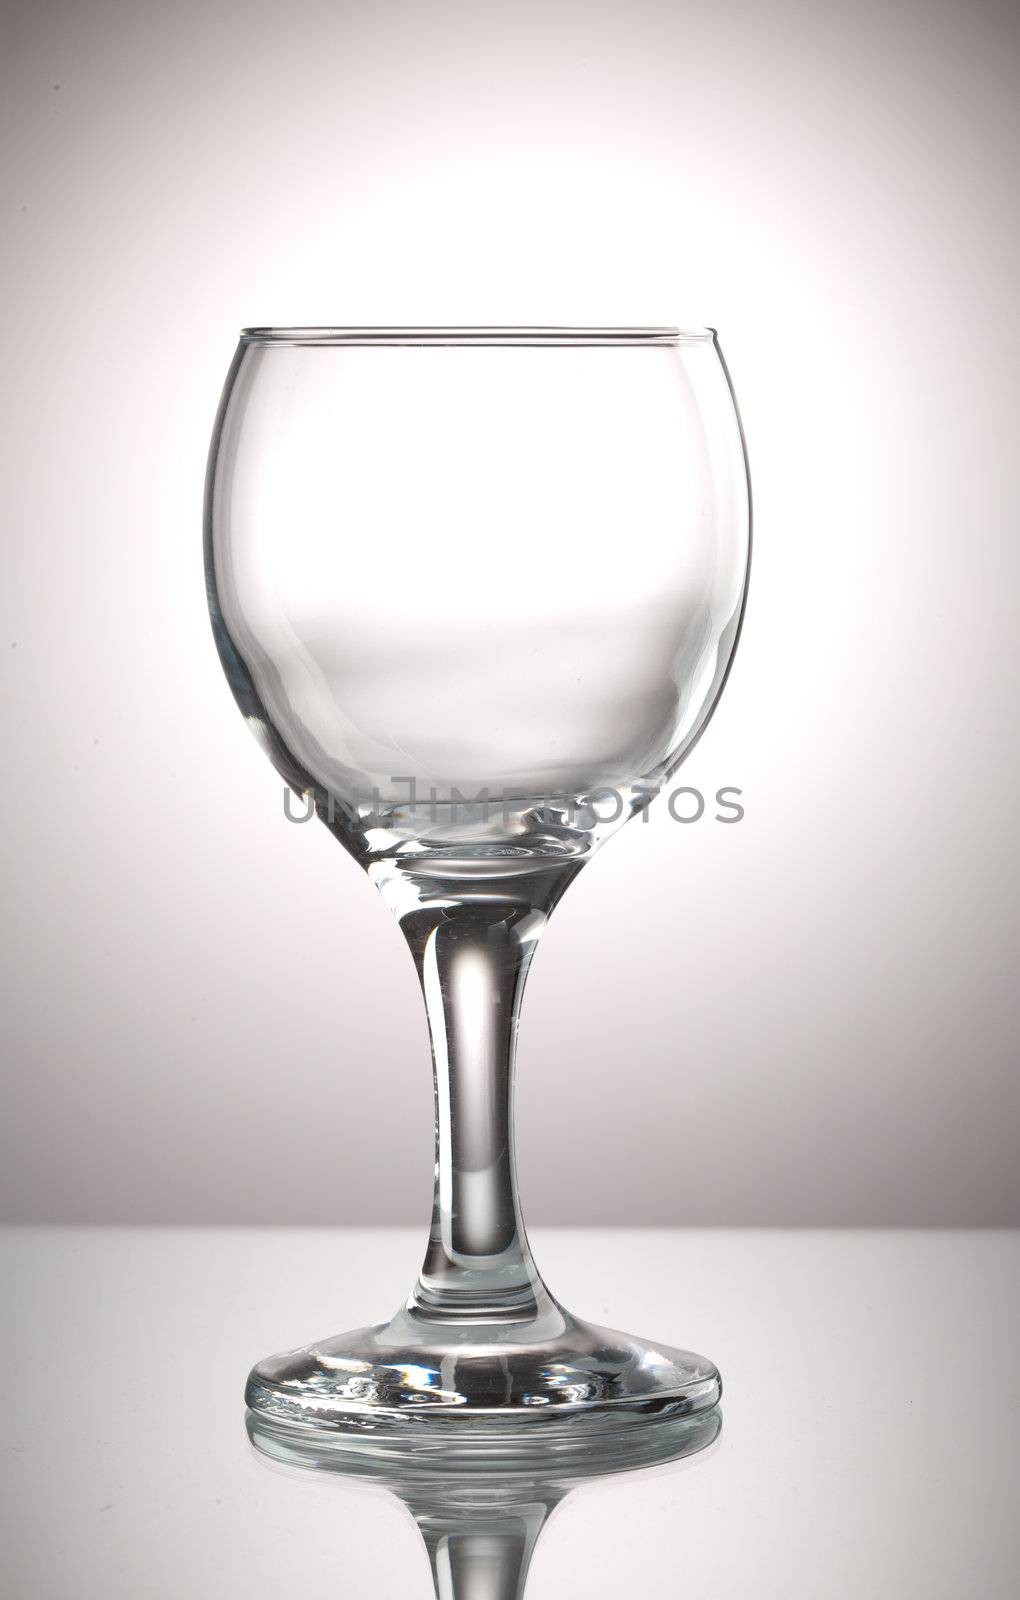 food series: single empty crystal wine glass